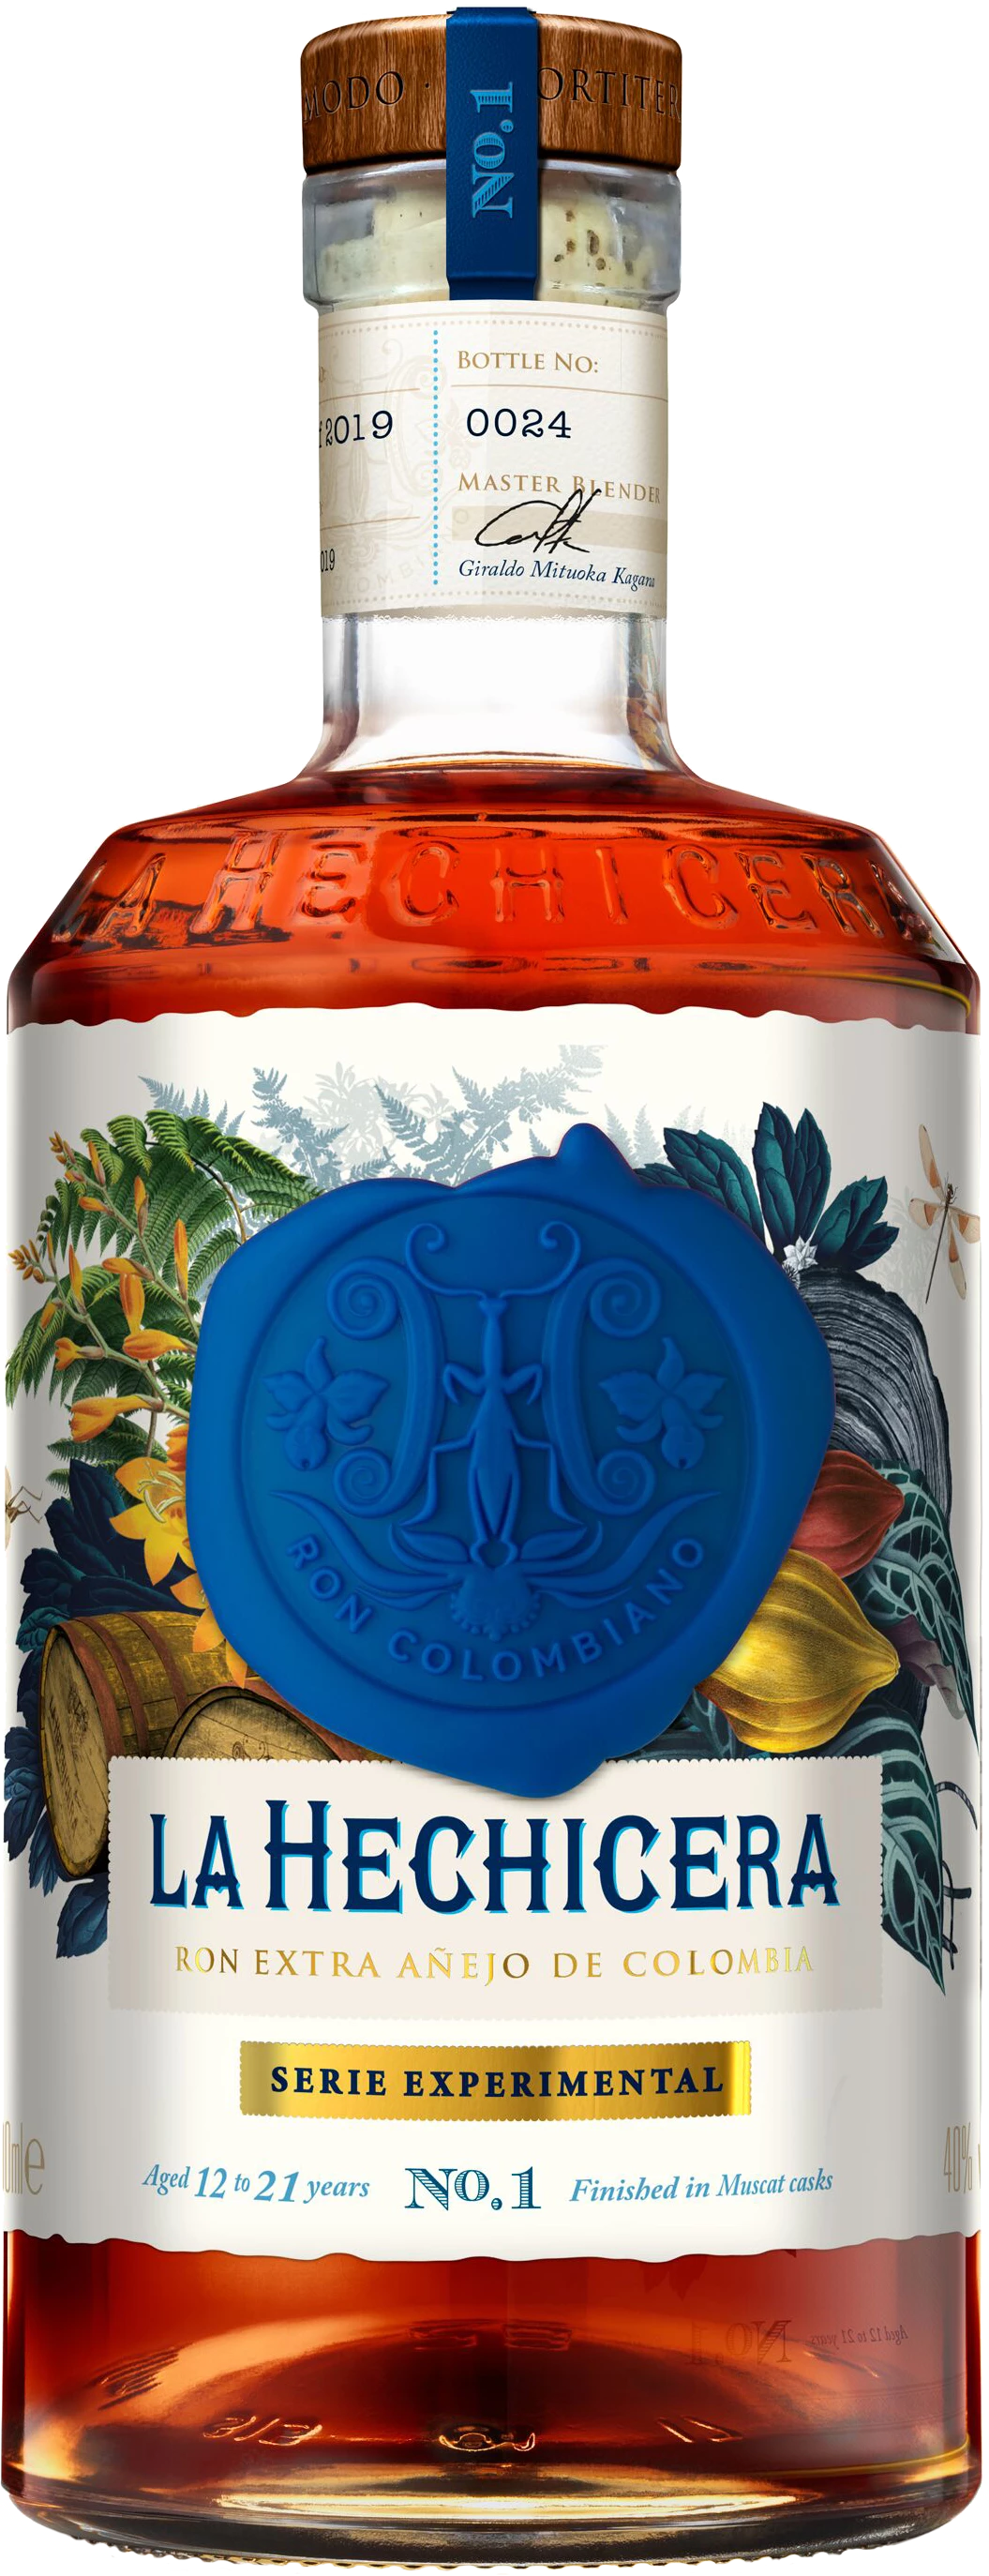 La Hechicera Rum Serie Experimental No.1 Moscatel Cask Finish 43% 0,7l